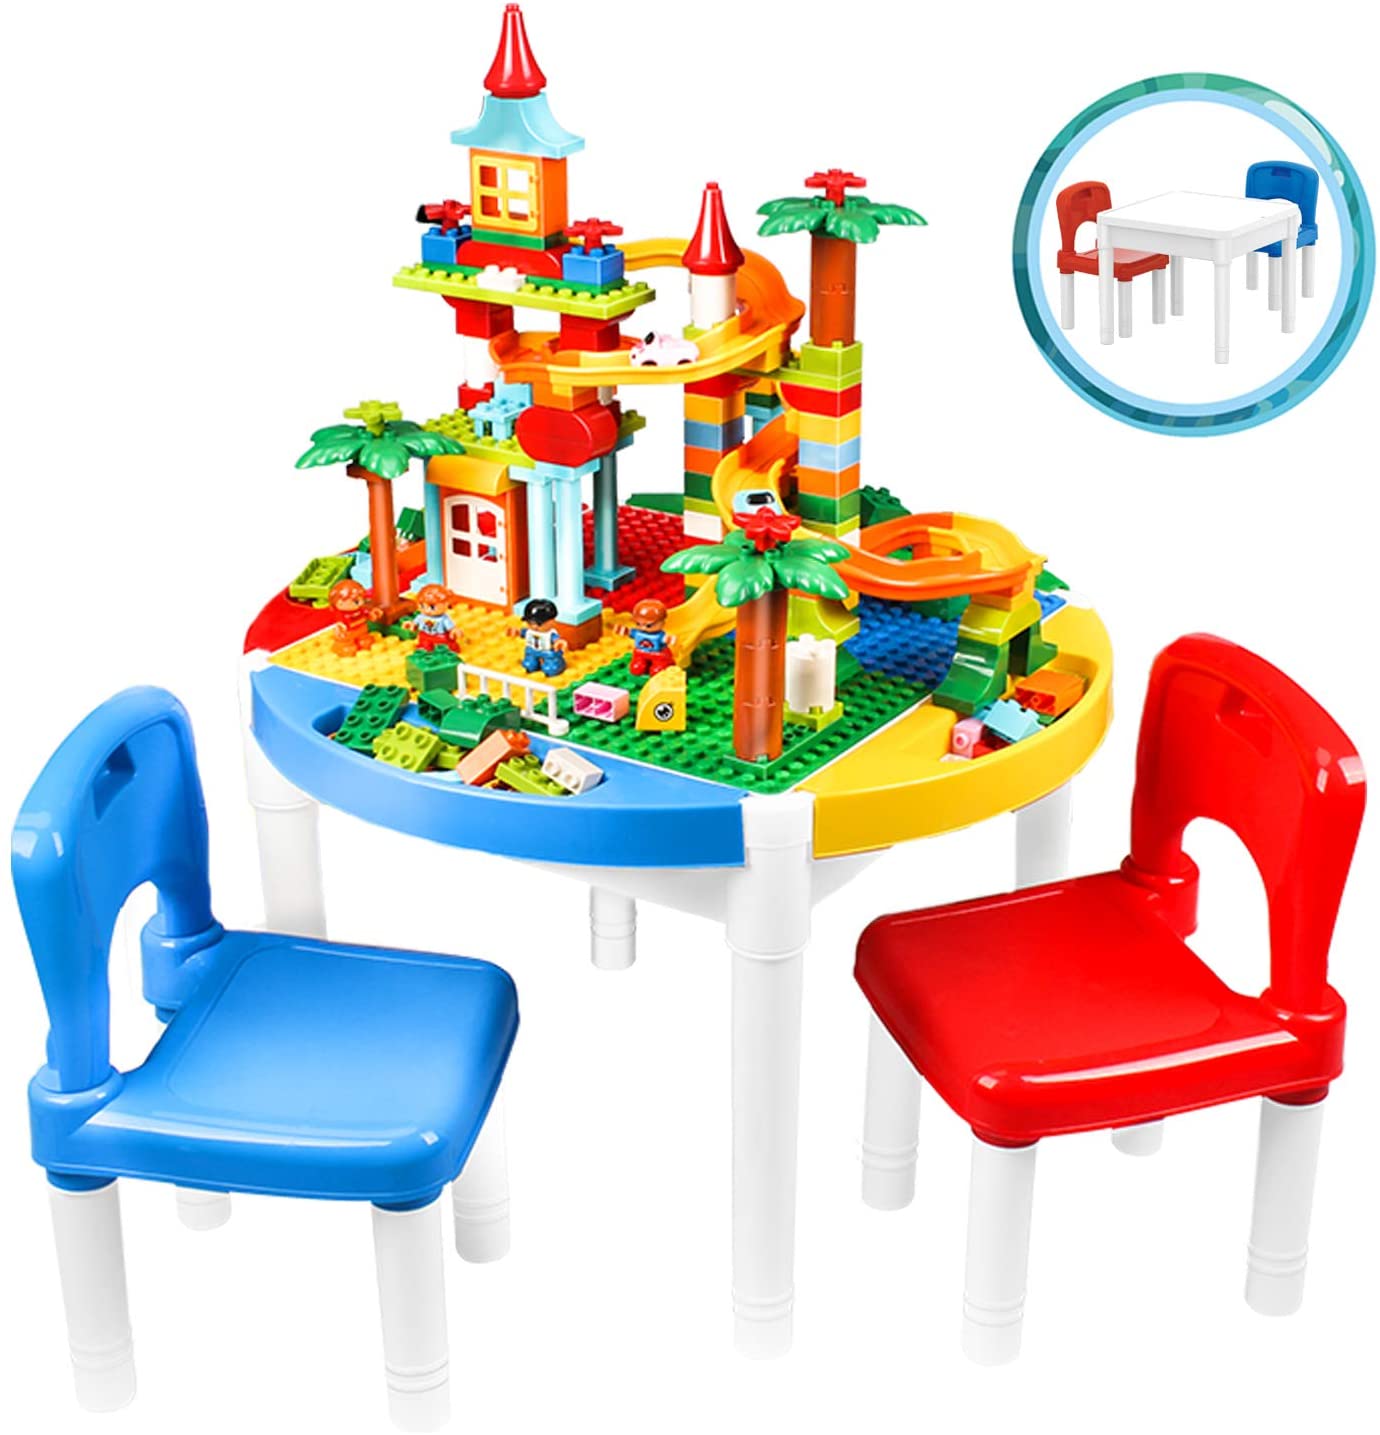 blocks desk + 2 chairs + 1000 pieces lego